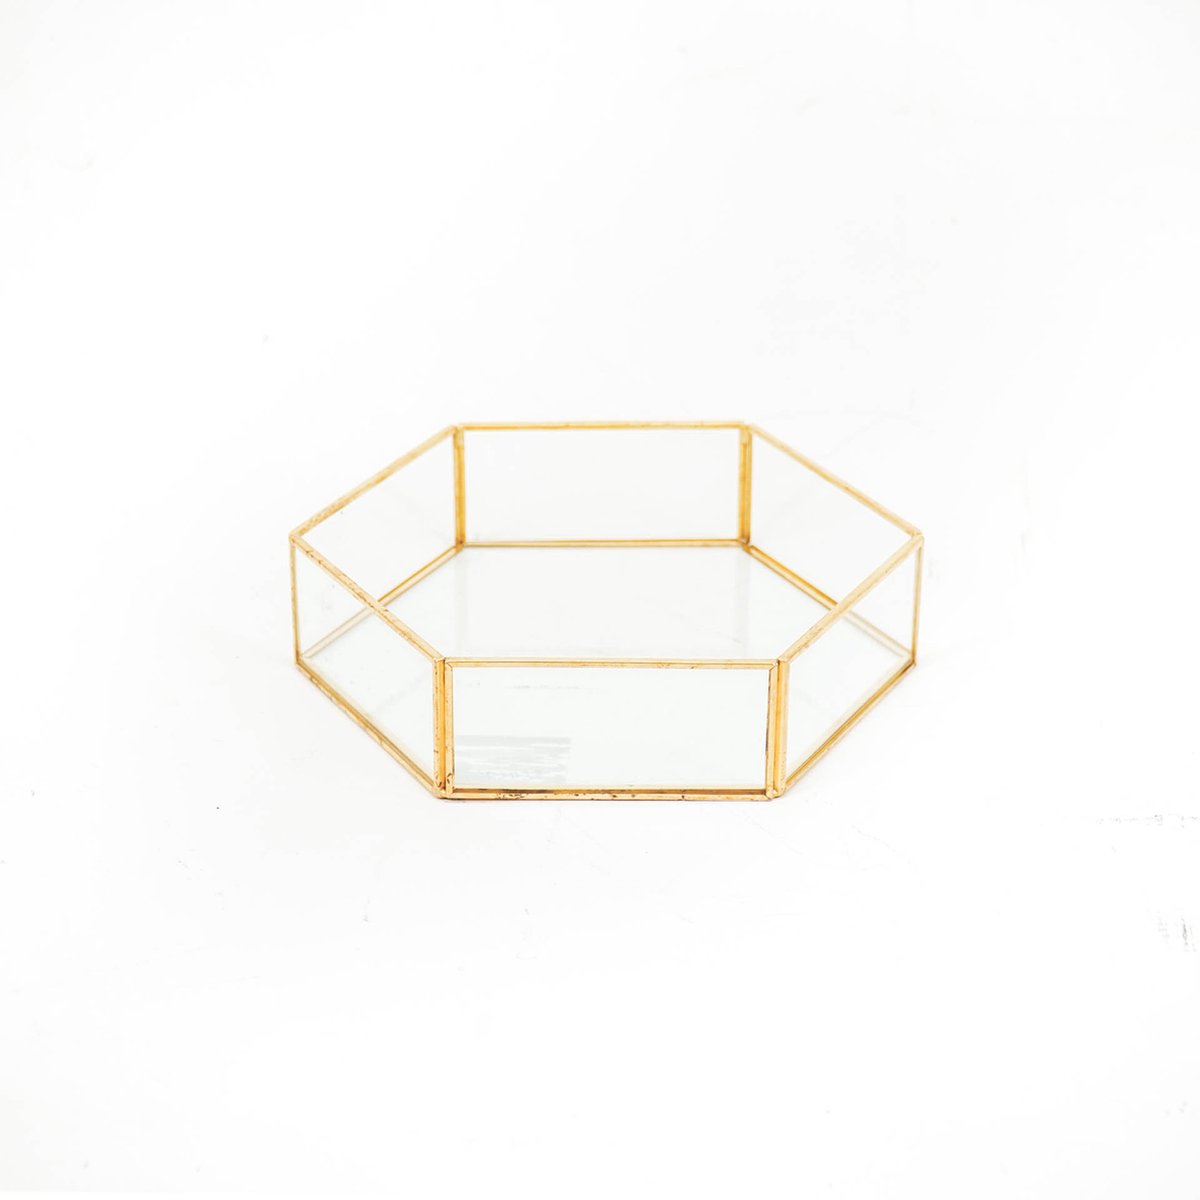 Housevitamin Glazen box Goud - 19x16,5x4,5cm